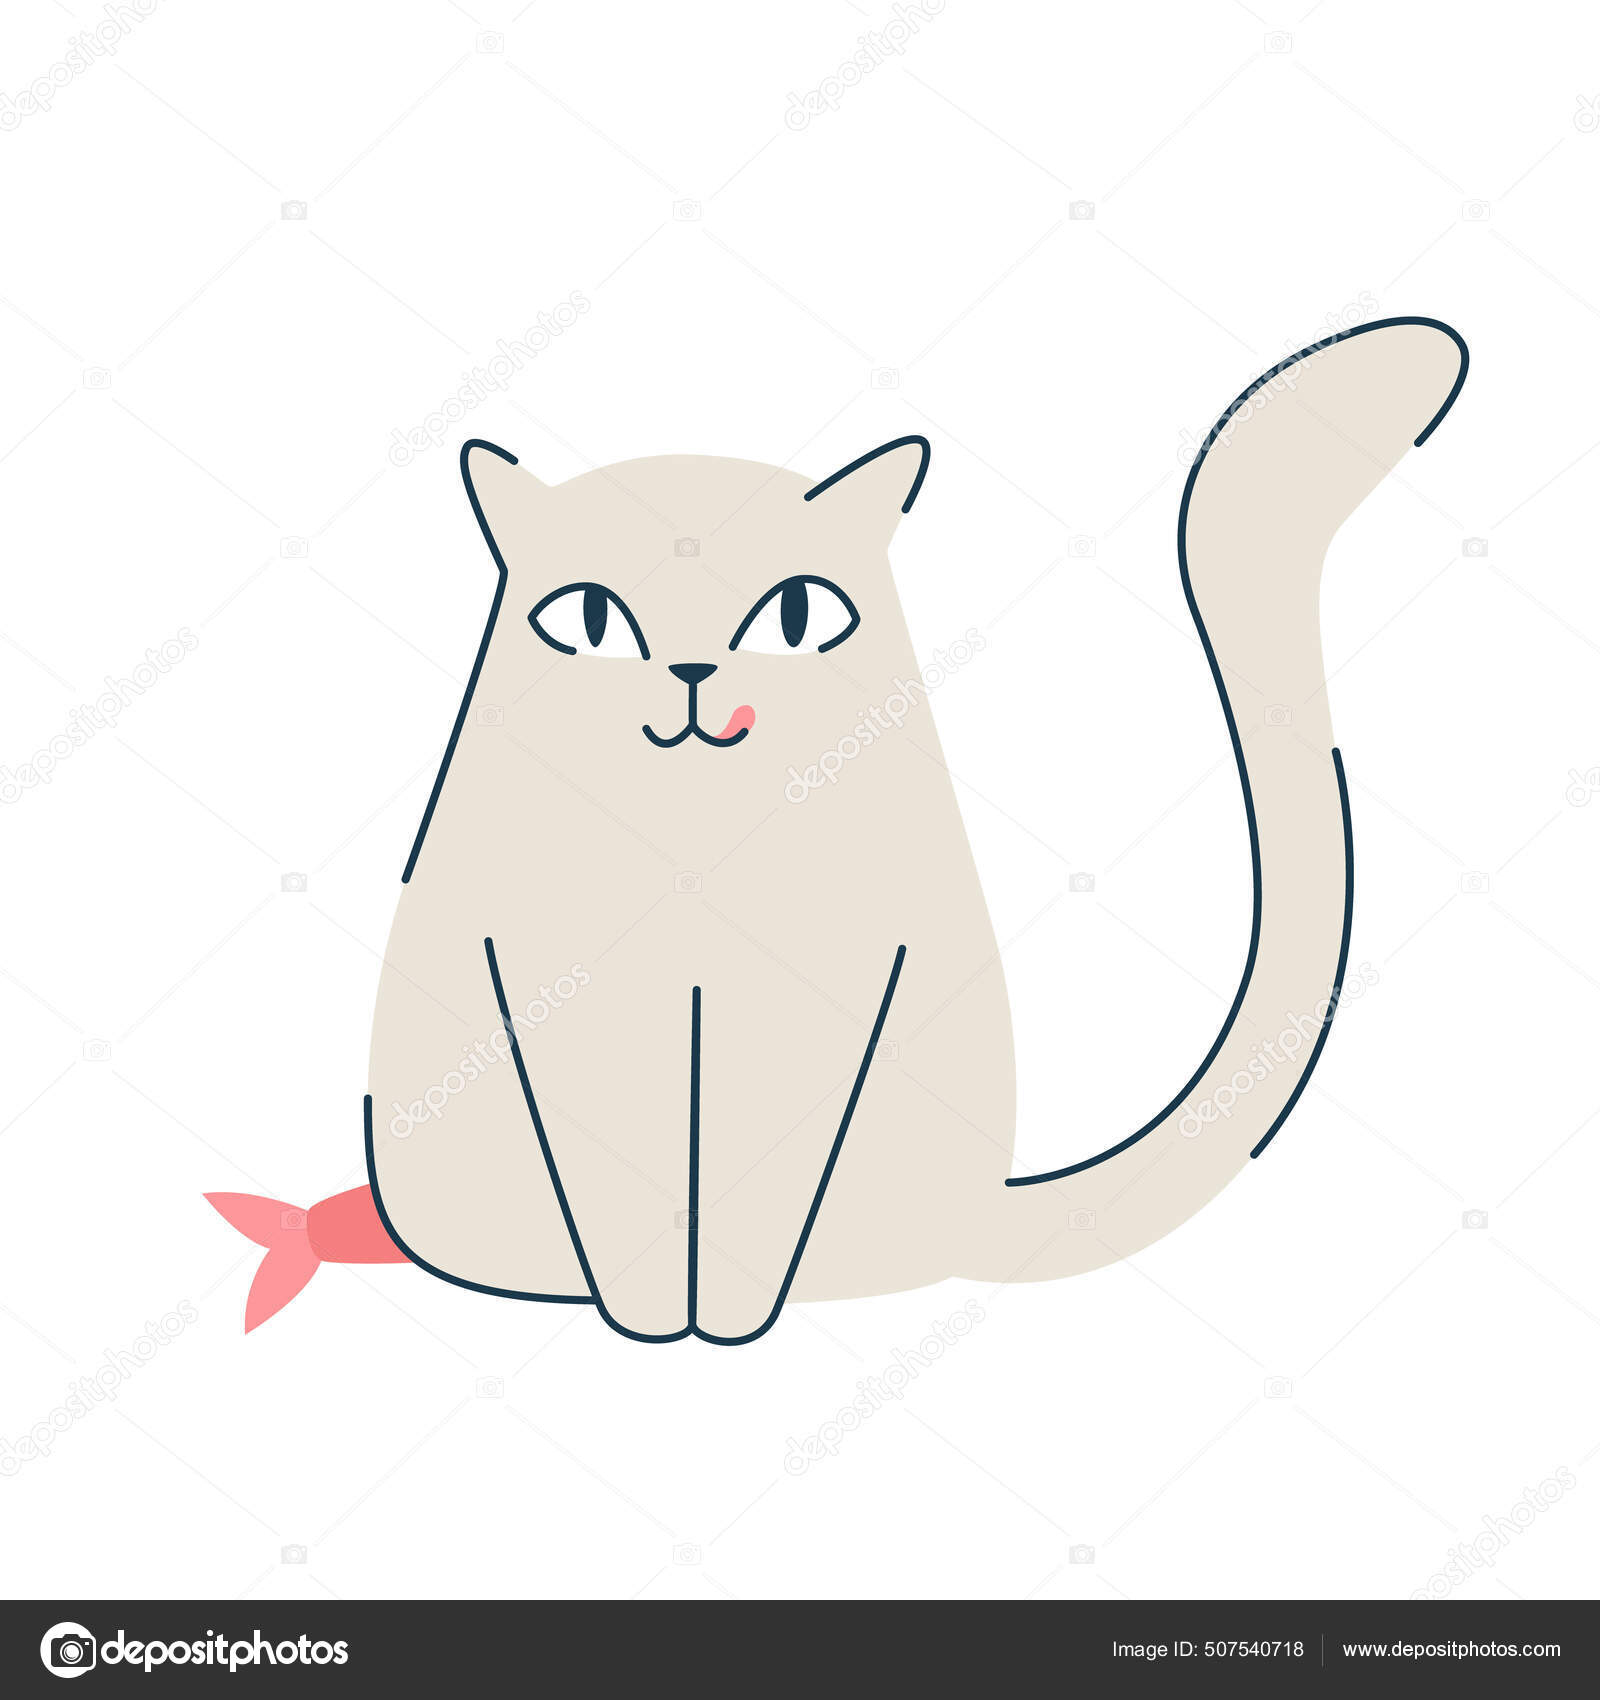 Premium Vector  Fat kawaii cat icon flat illustration of a happy smiling  cat